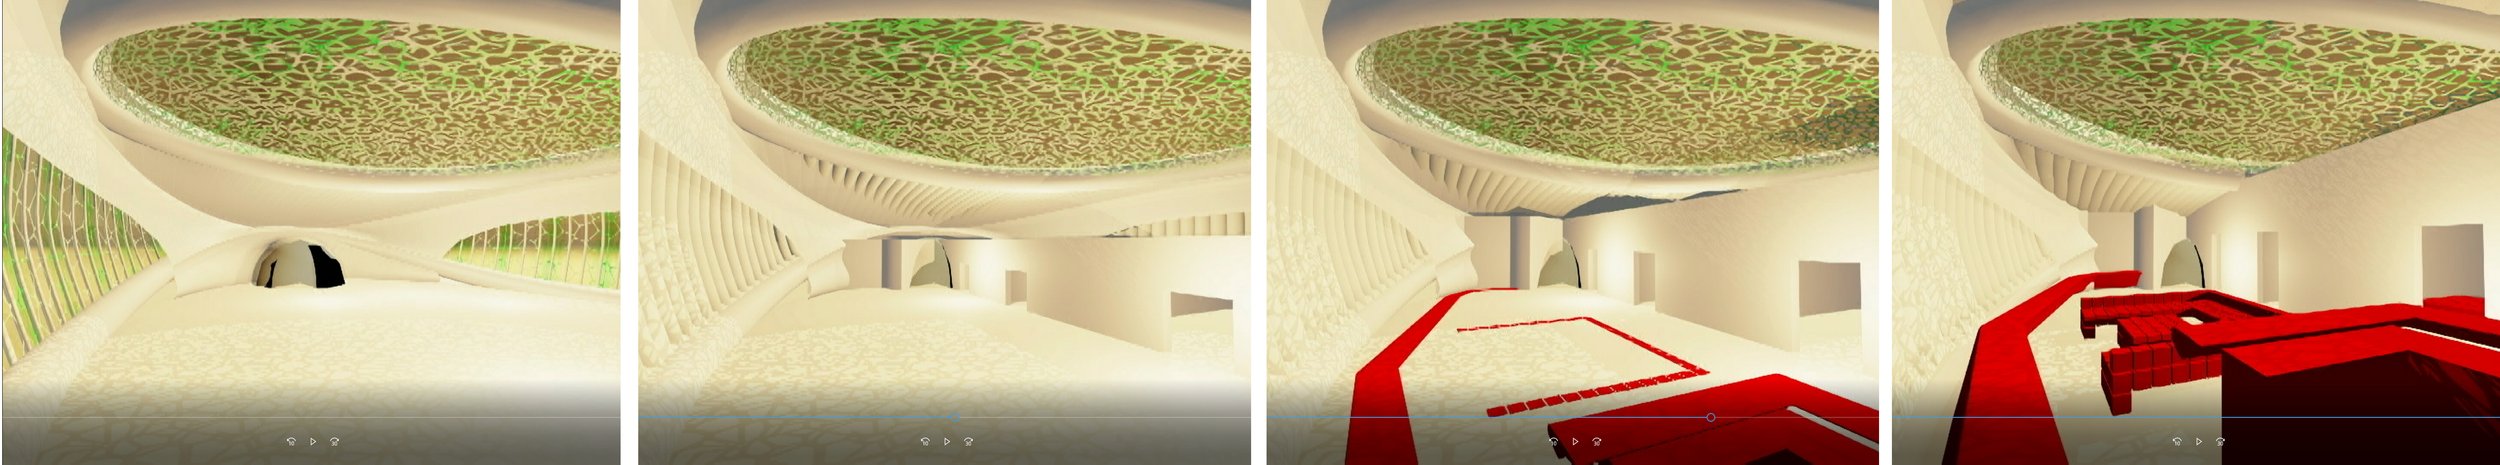 Artist's rendering of a mycelium living area.